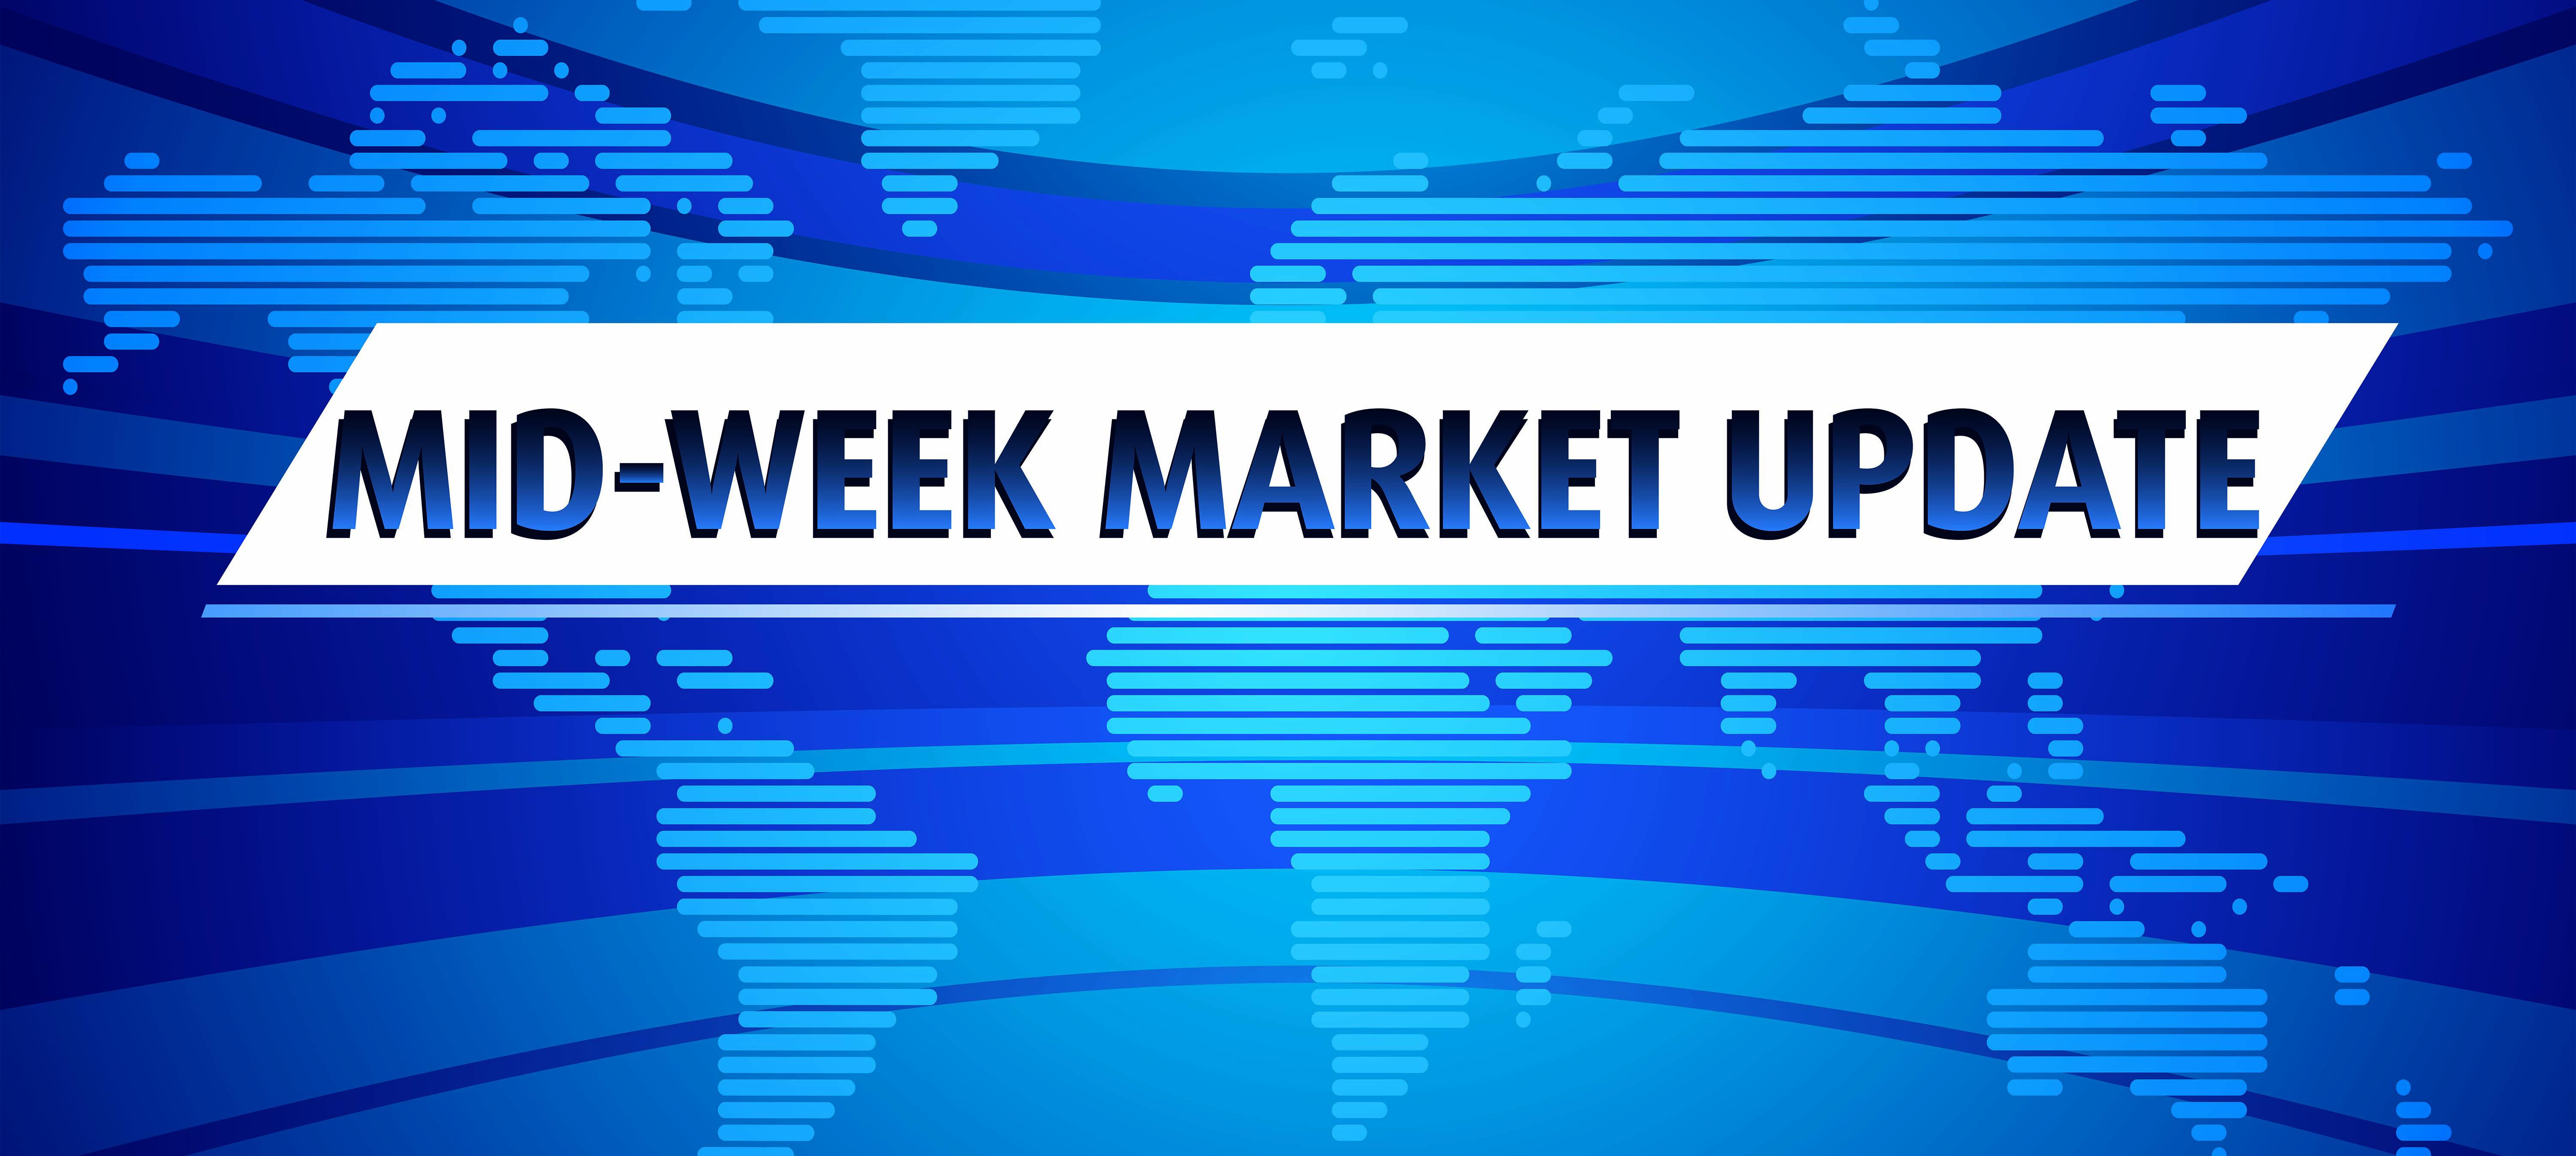 Midweek market update